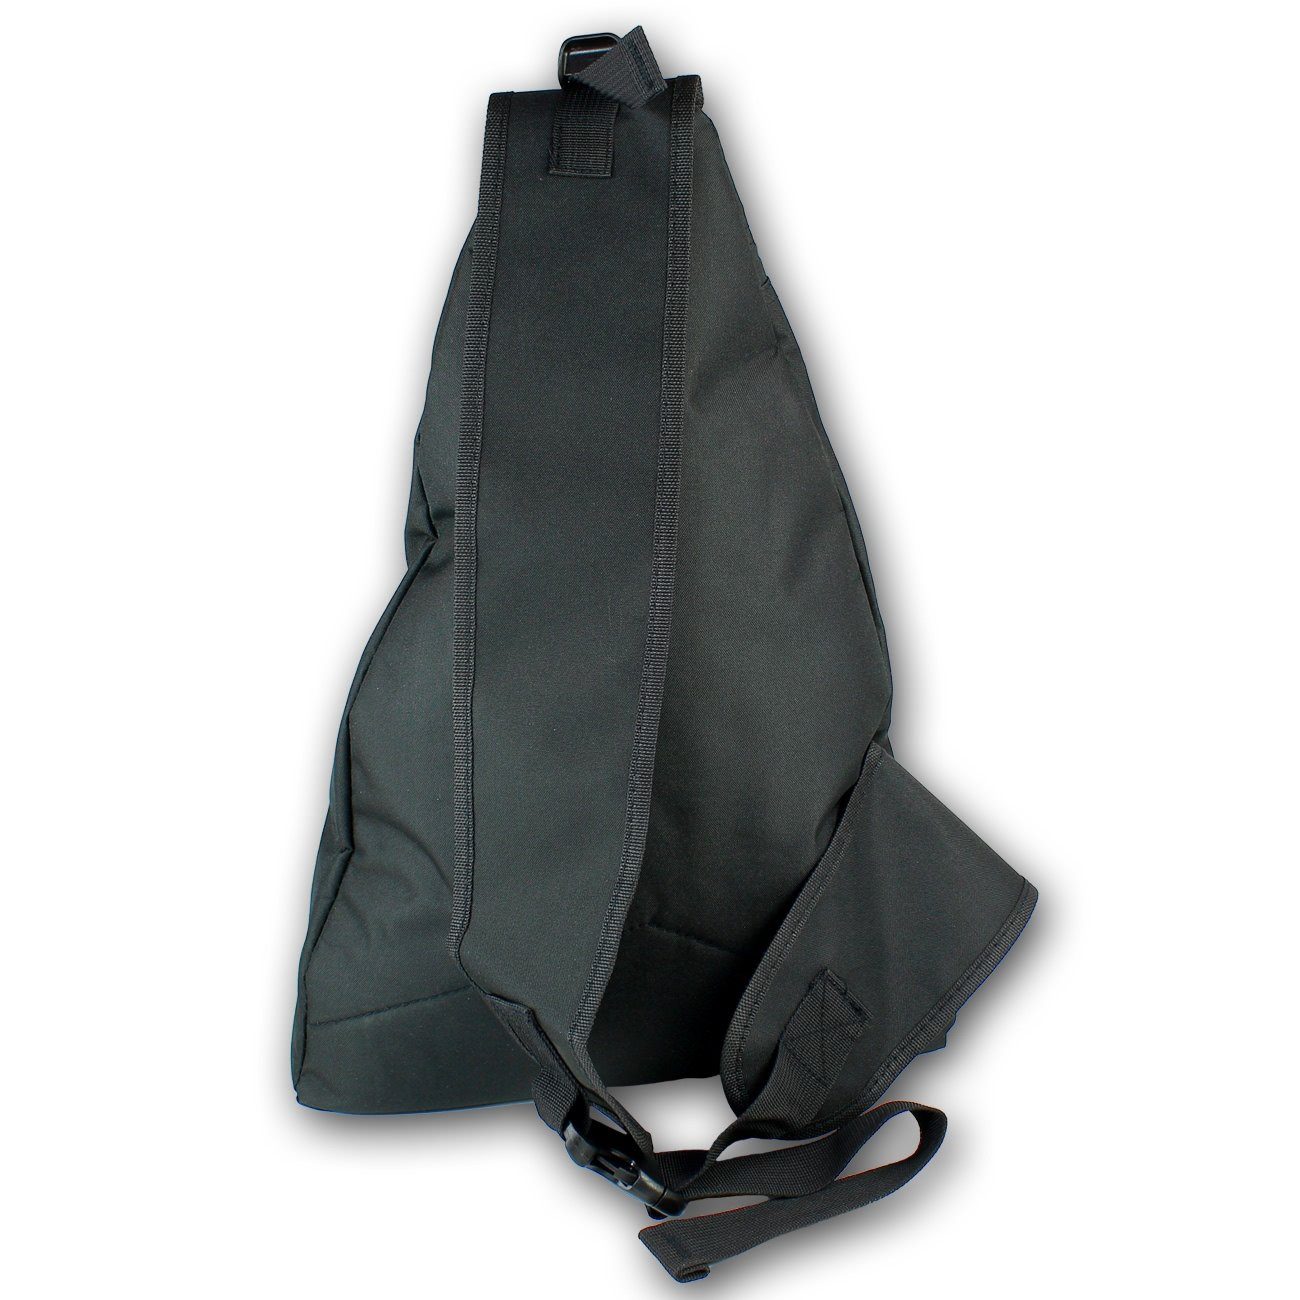 BAG STREET 45cm Bodybag ca. x Bag Street (Freizeitrucksack), schwarz Nylon Nylon, 32cm ca. schwarz Freizeitrucksack Freizeitrucksack